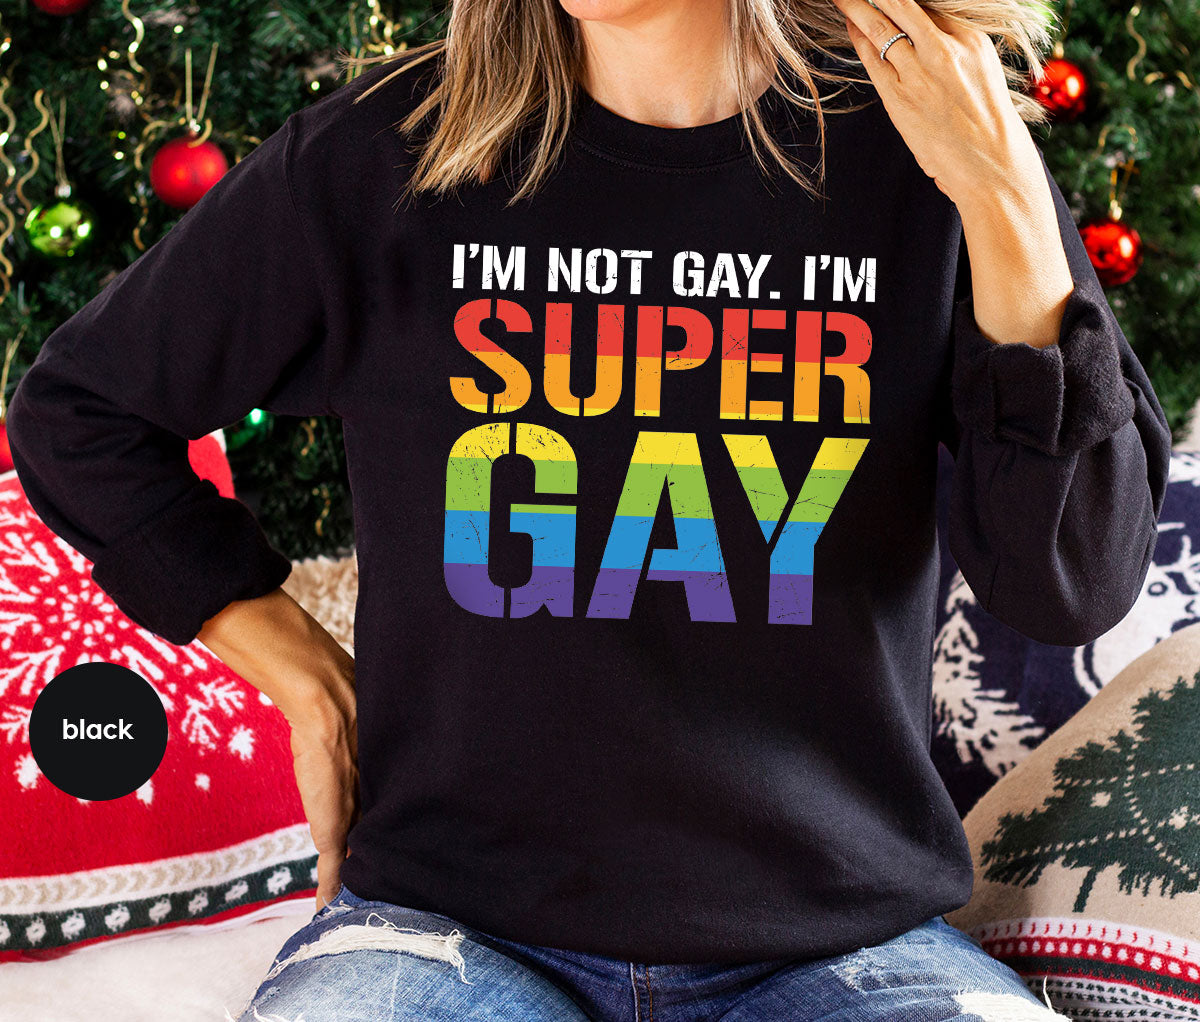 Super Gay Shirt, LGBT Power T-Shirt, Super Gay LGBT Tee